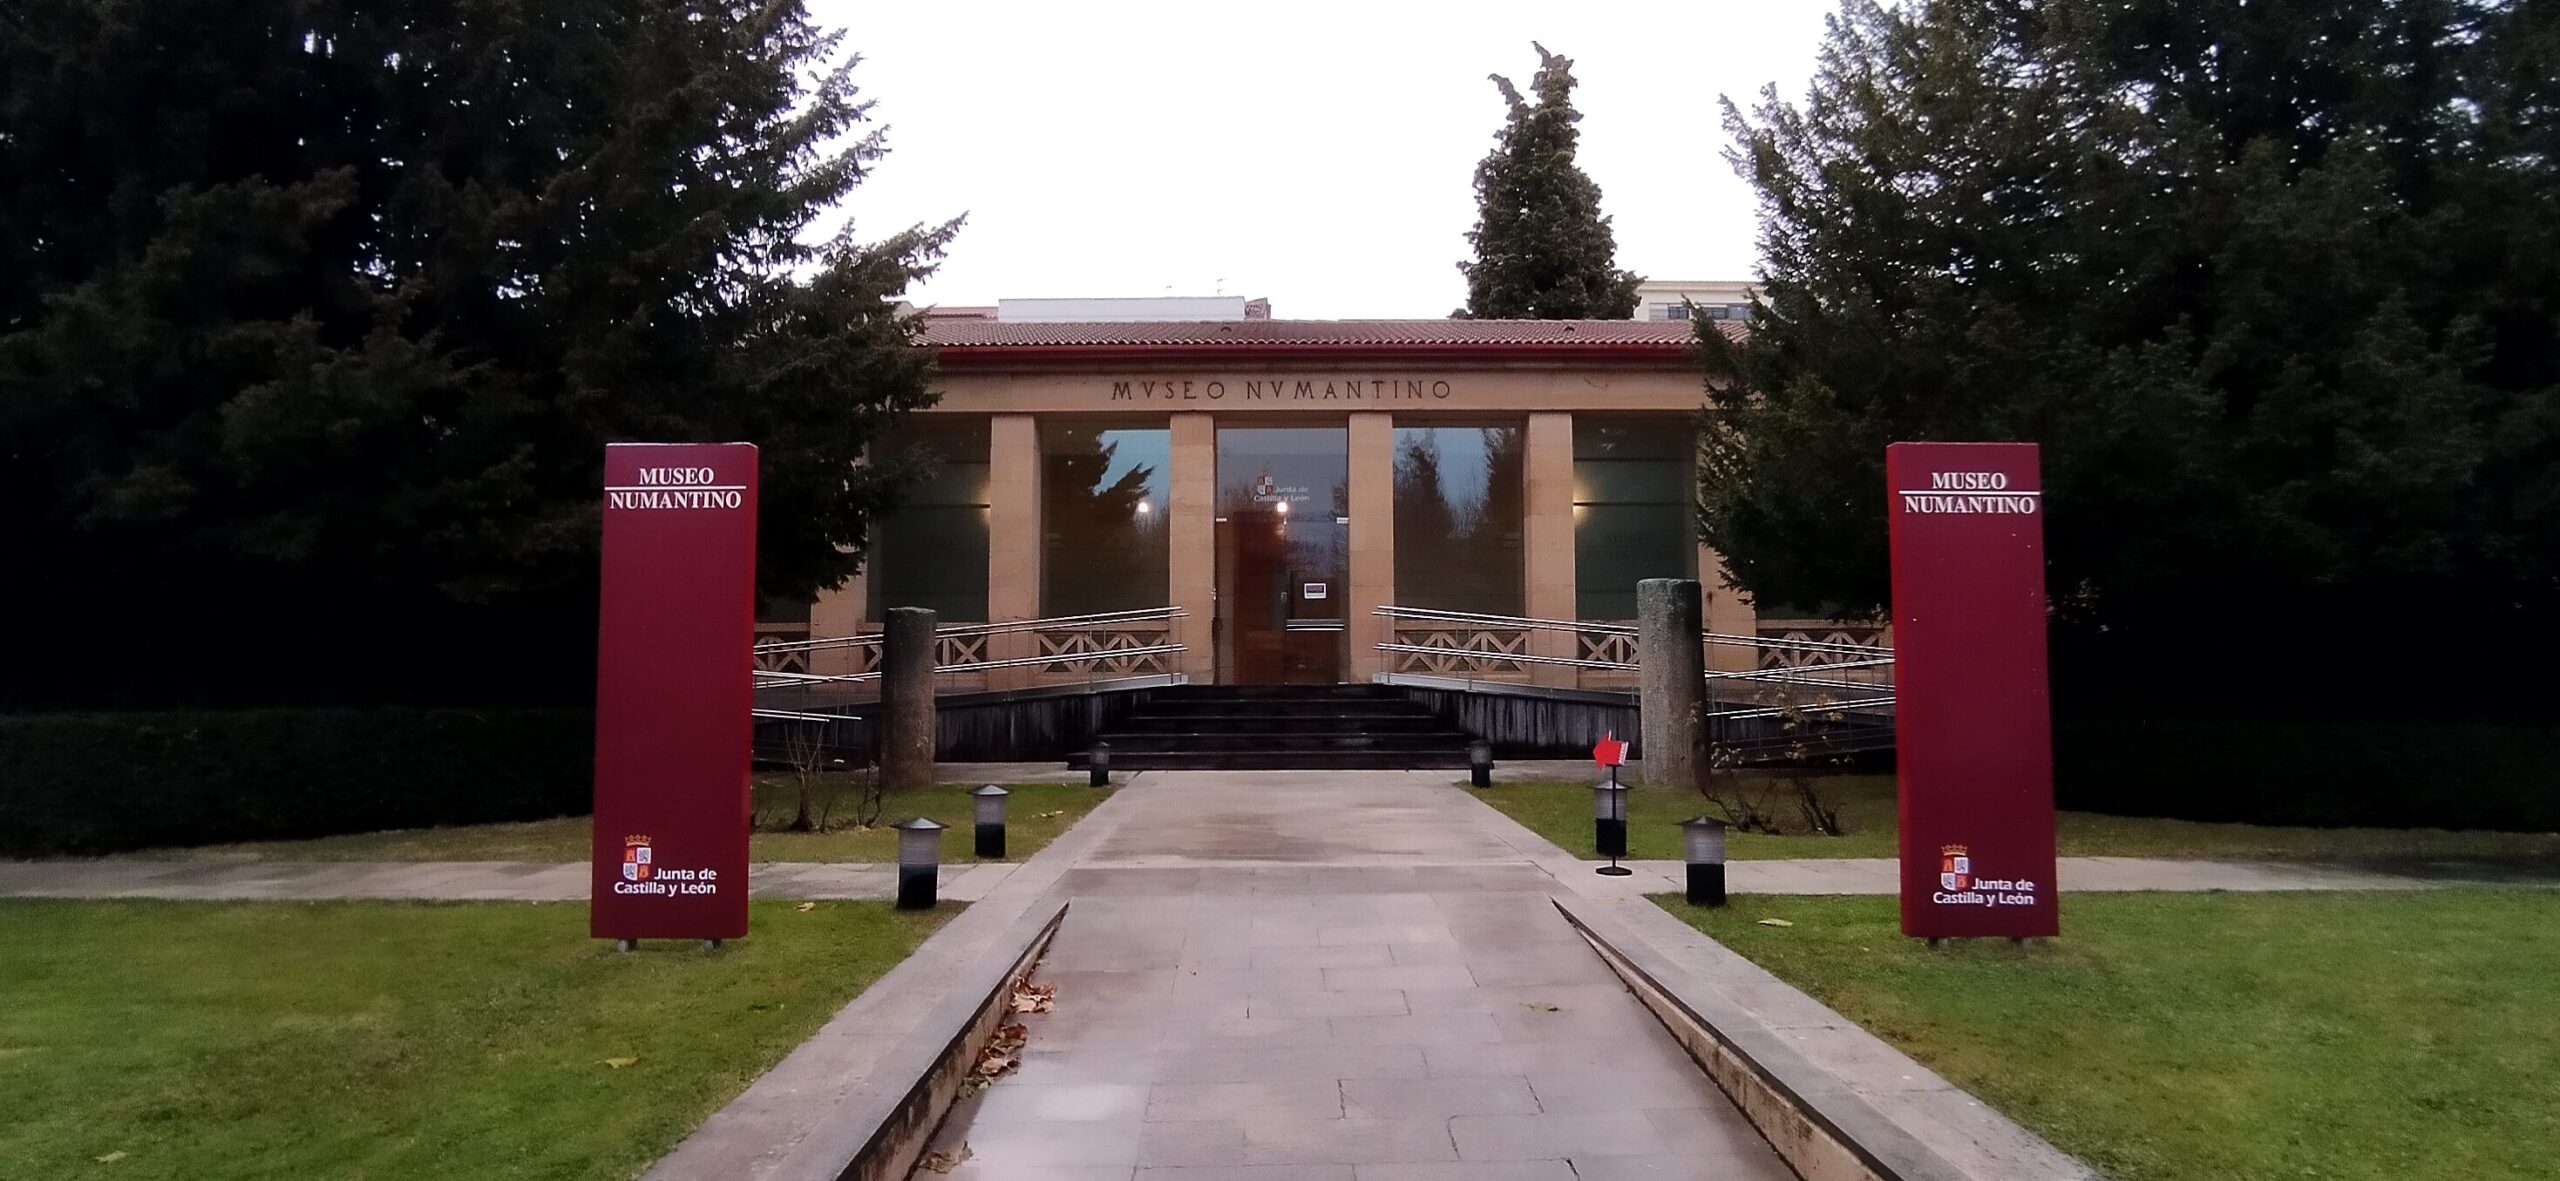 MUSEO NUMANTINO DE SORIA		Soria	Soria	Museo